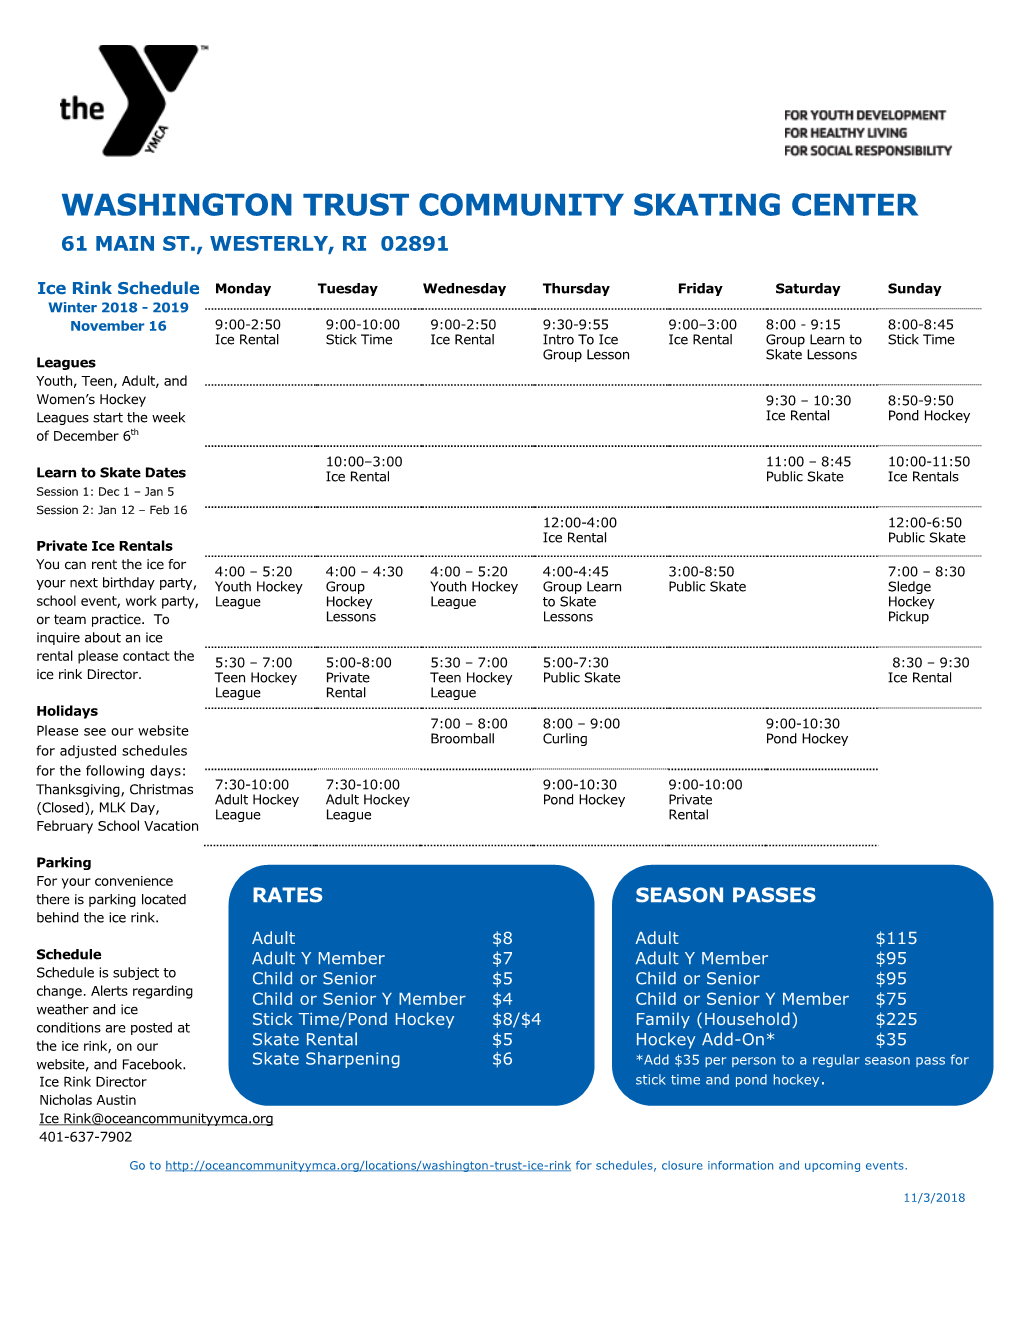 Washington Trust Community Skating Center 61 Main St., Westerly, Ri 02891